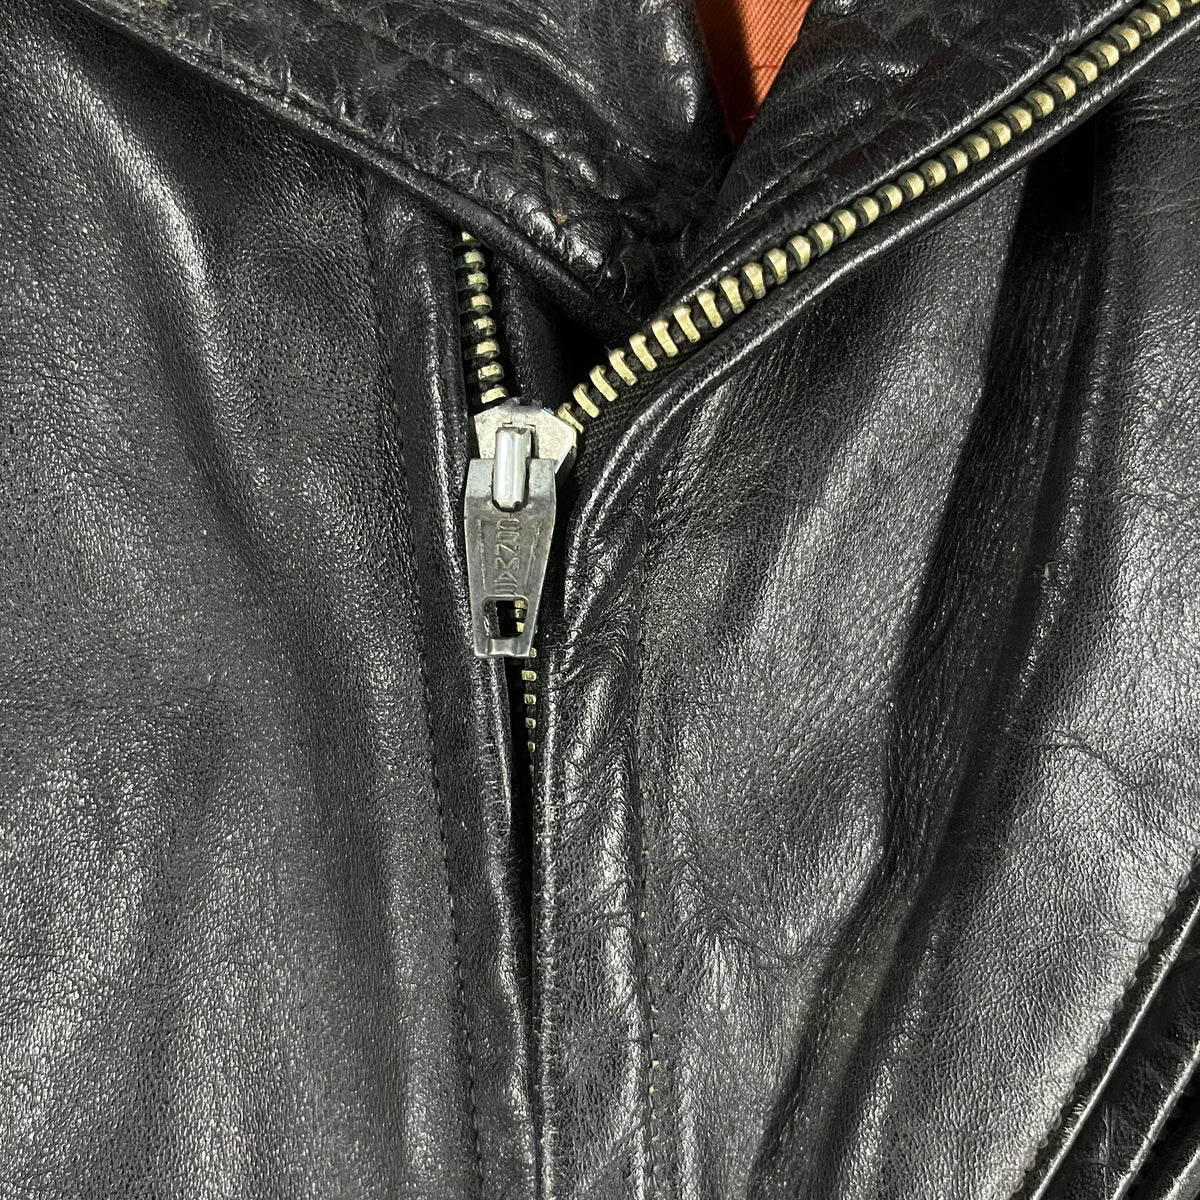 Vintage Fraternity Prep &quot;Sears Roebuck&quot; Leather Steerhide Motorcycle Jacket